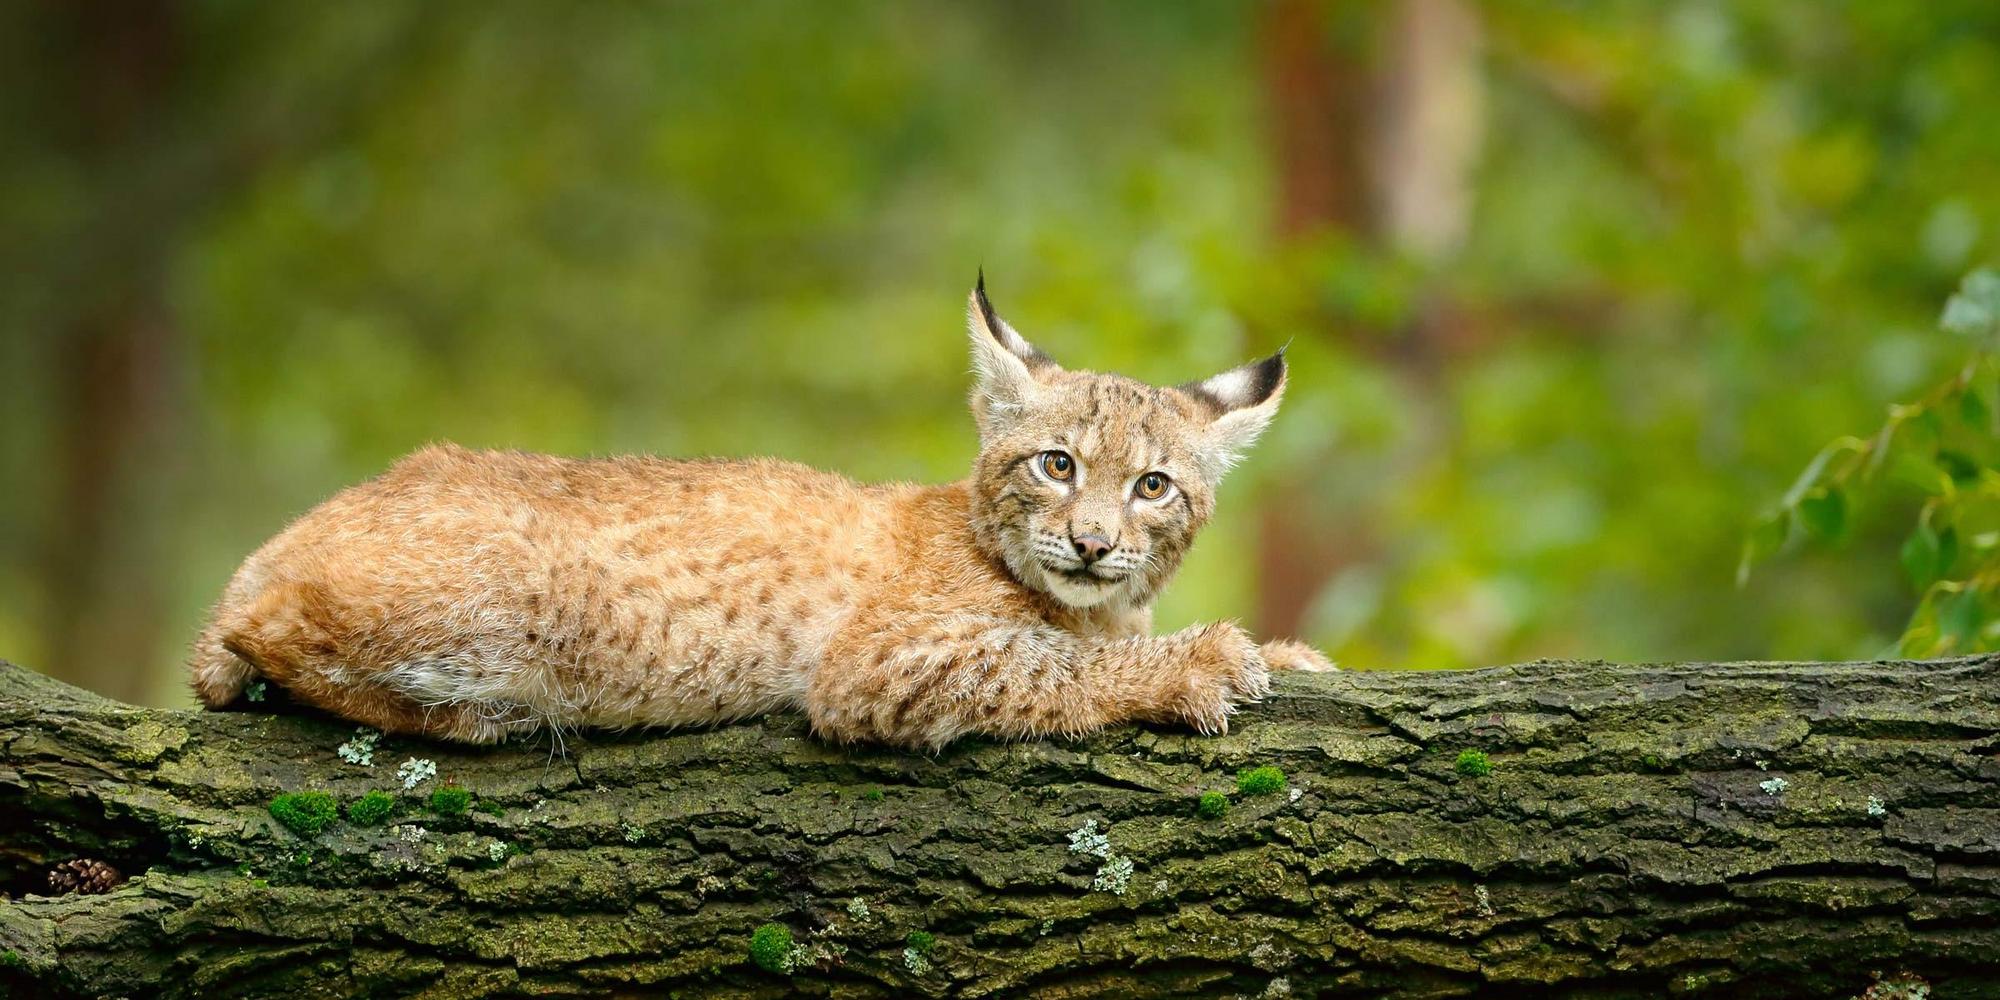 8A young lynx lies on a fallen tree.